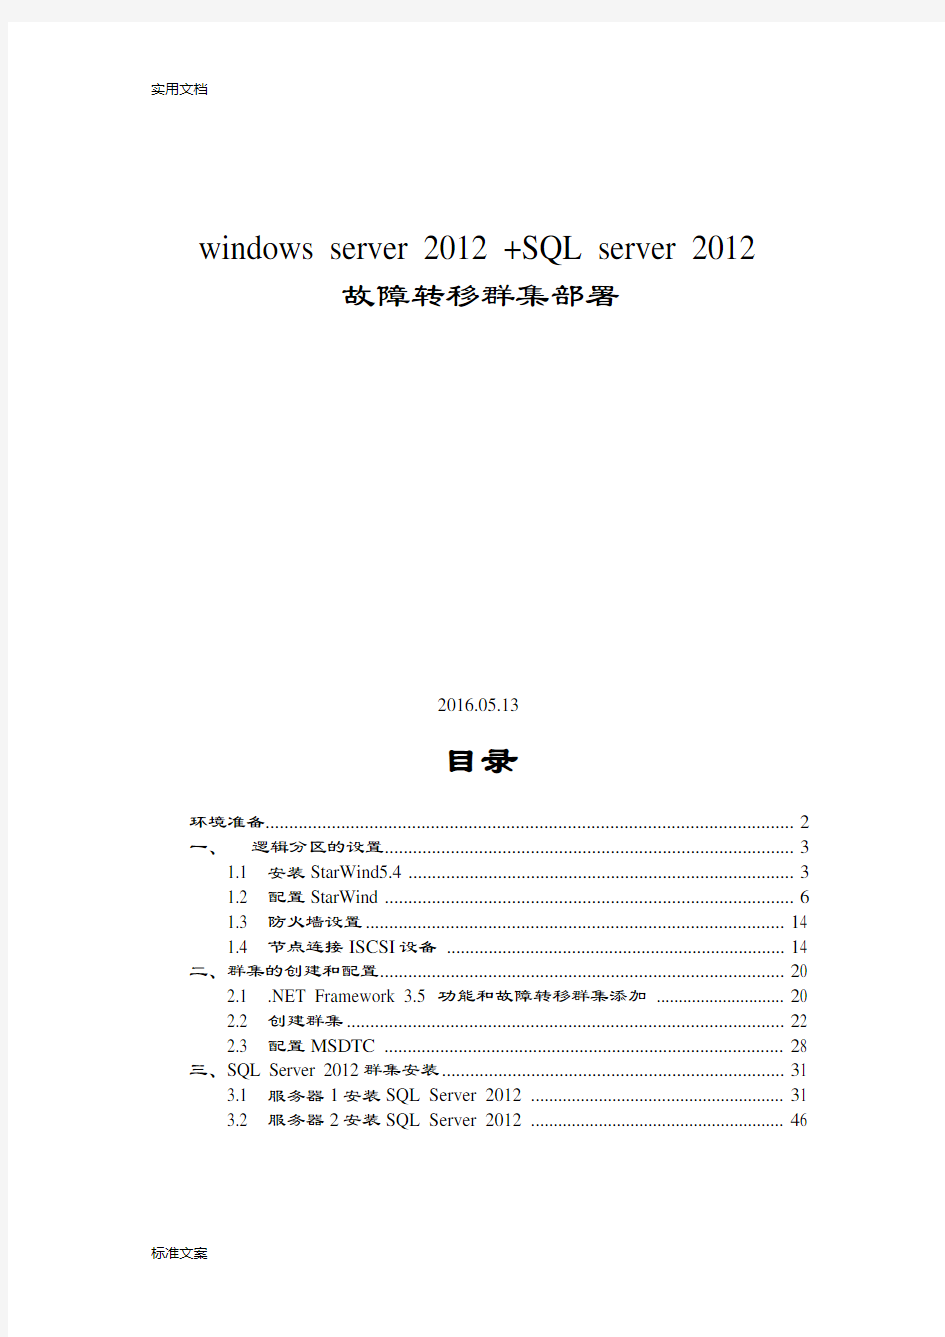 WindowsServer2012R2+SQLServer2012故障转移群集部署